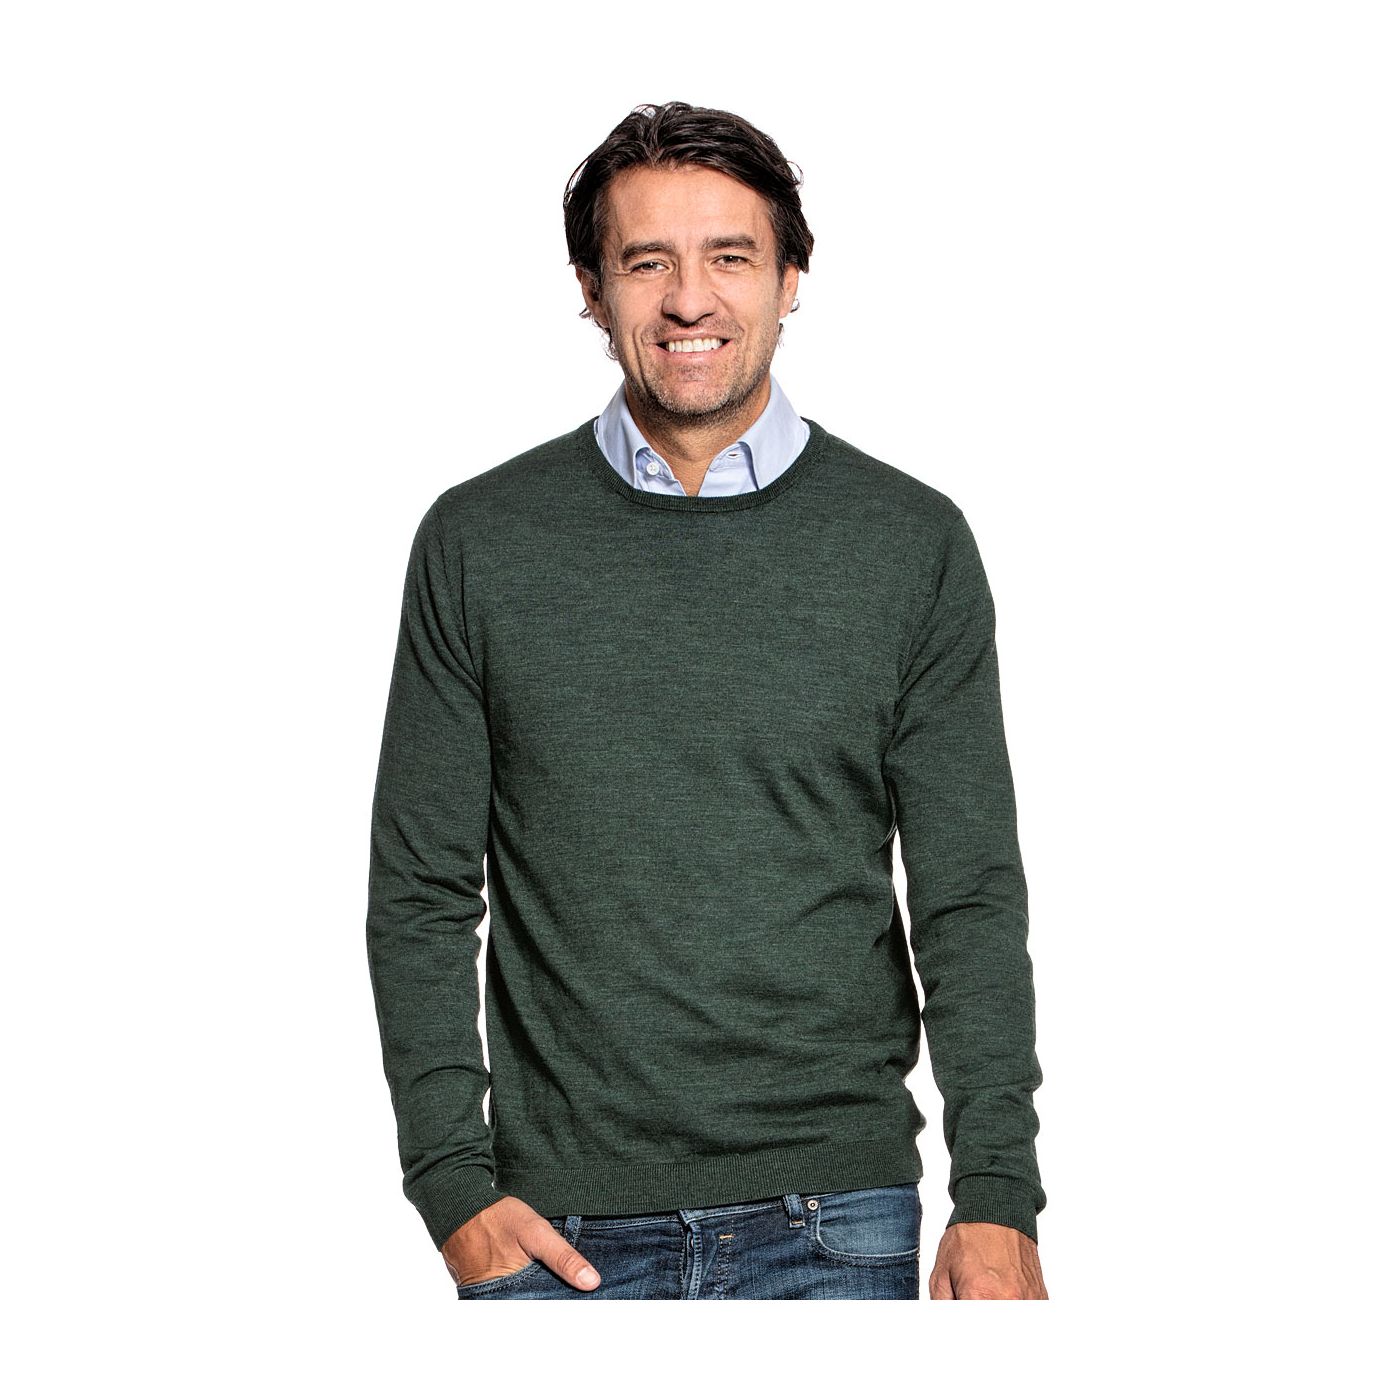 Crew neck sweater for men made of Merino wool in Dark green